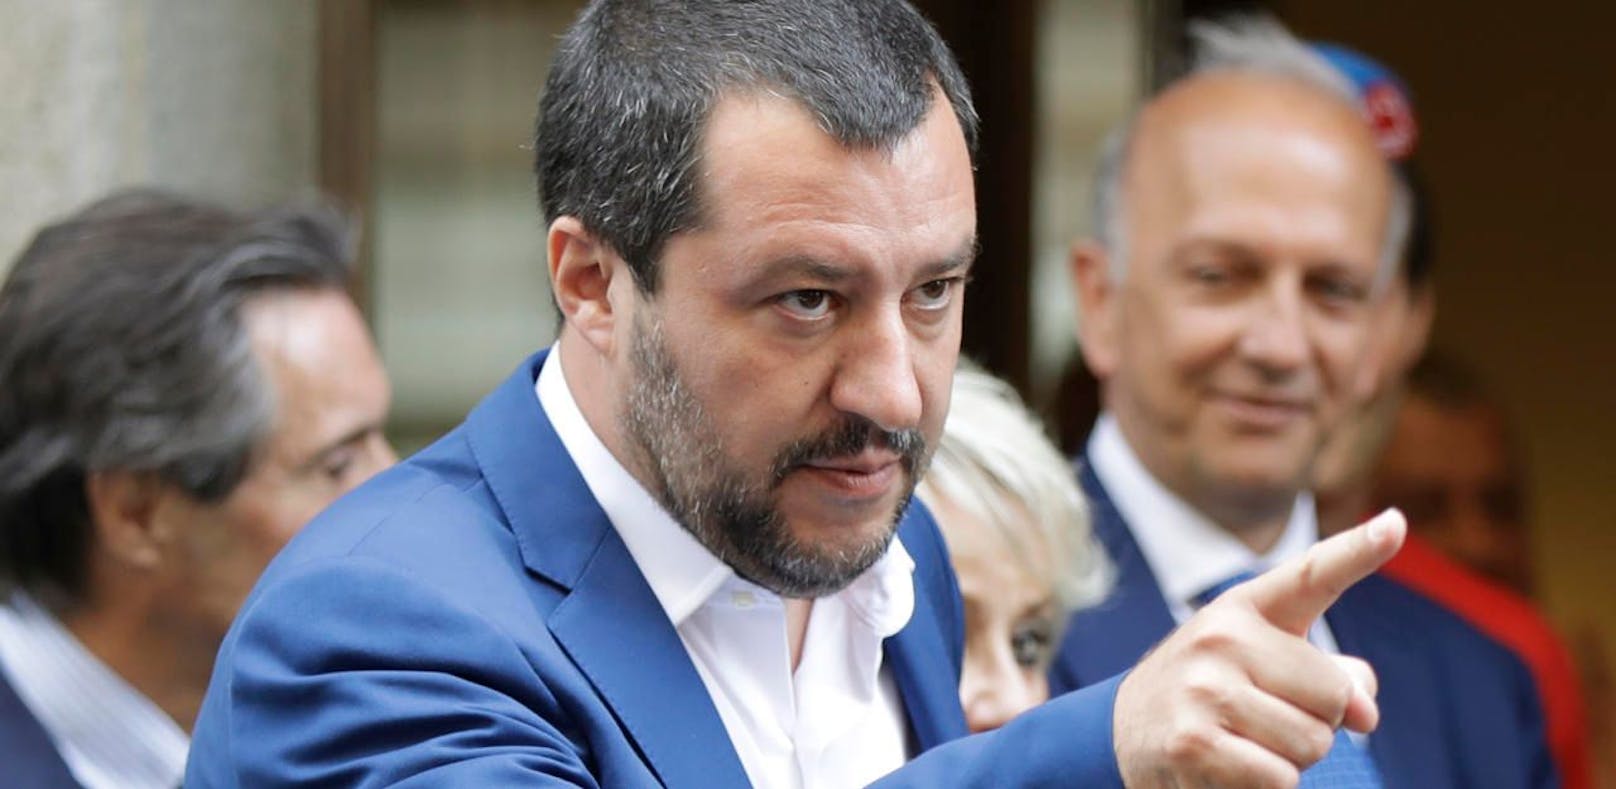 Salvini wünscht Merkel und Juncker "arrivederci"